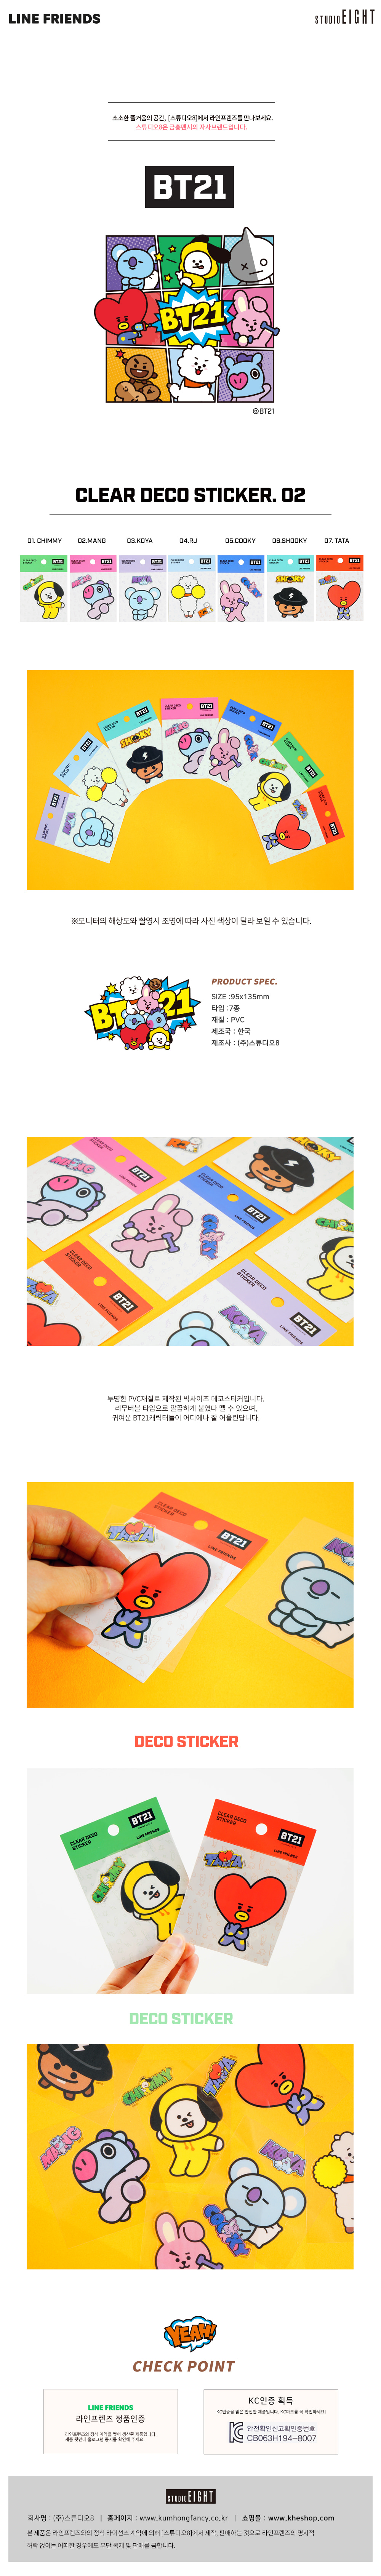 BT21 - Clear Deco Sticker (Korea Edition)